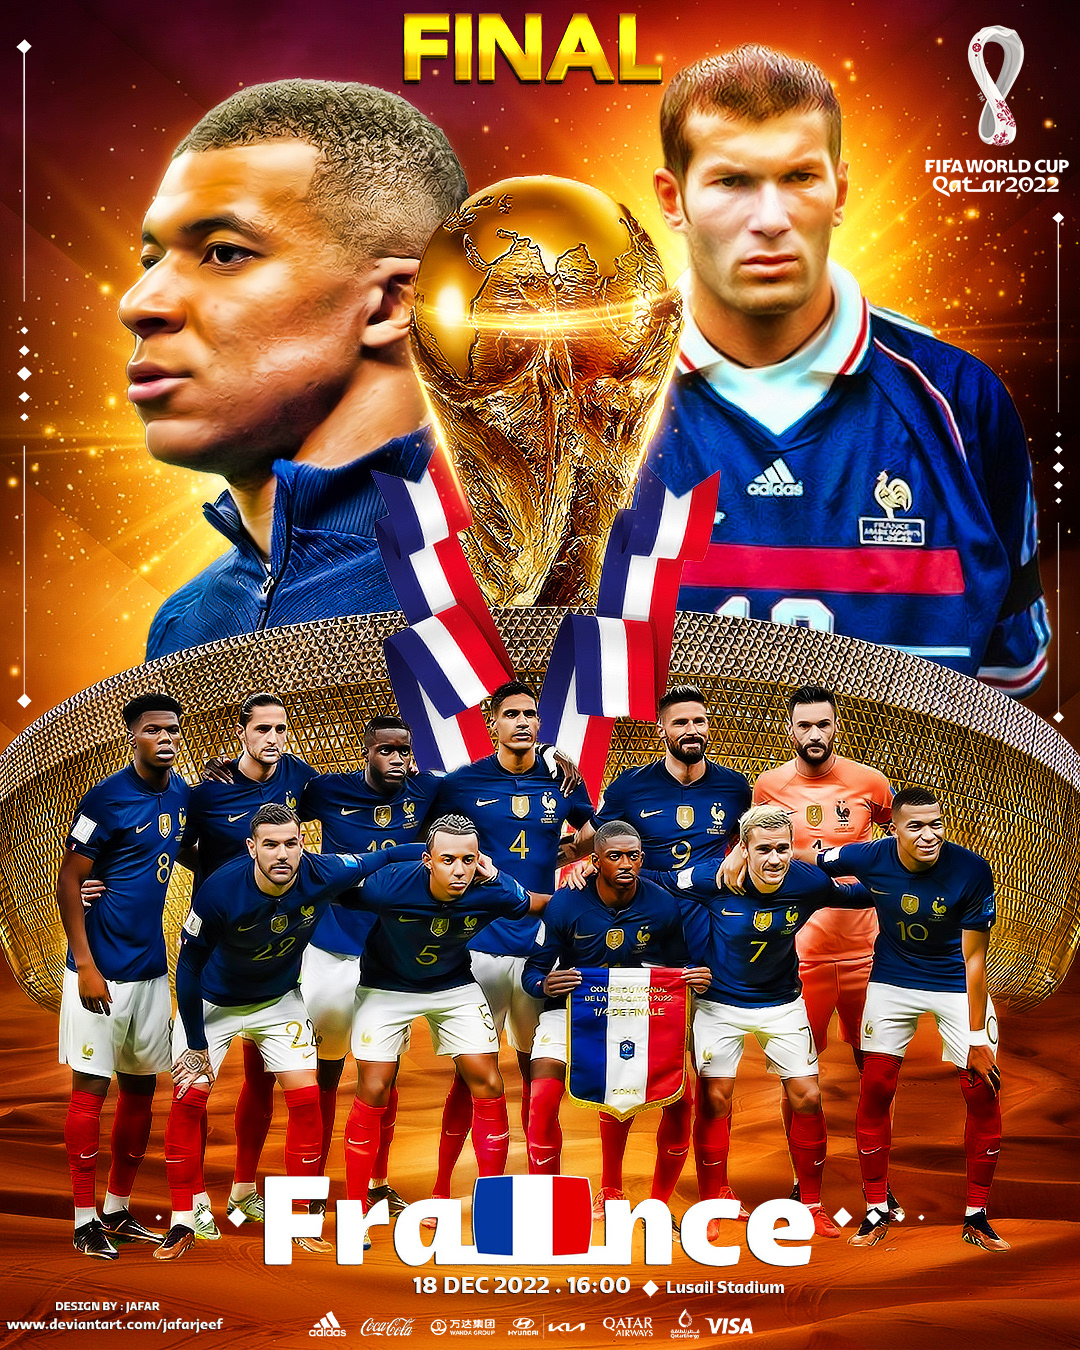 World cup final 2022